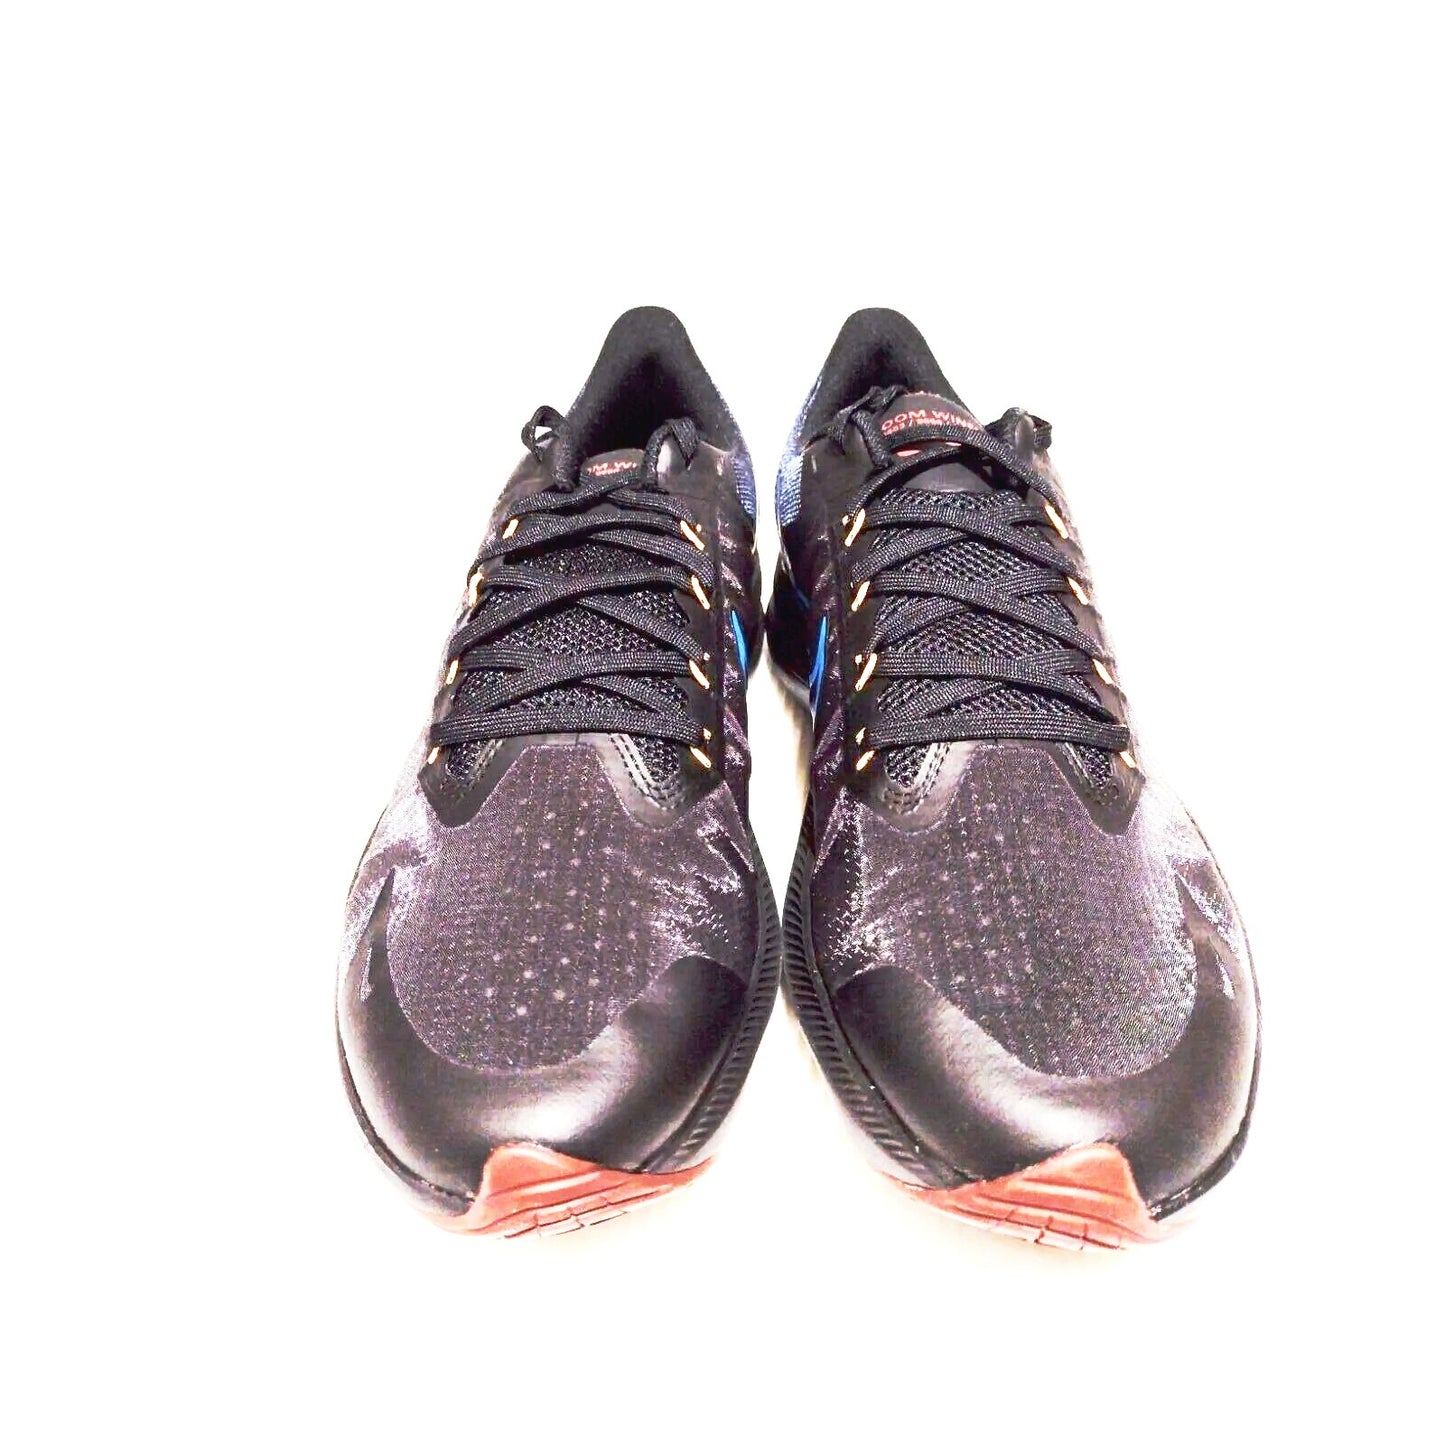 Nike zoom winflo 8 black photo blue running shoes size 12 us men